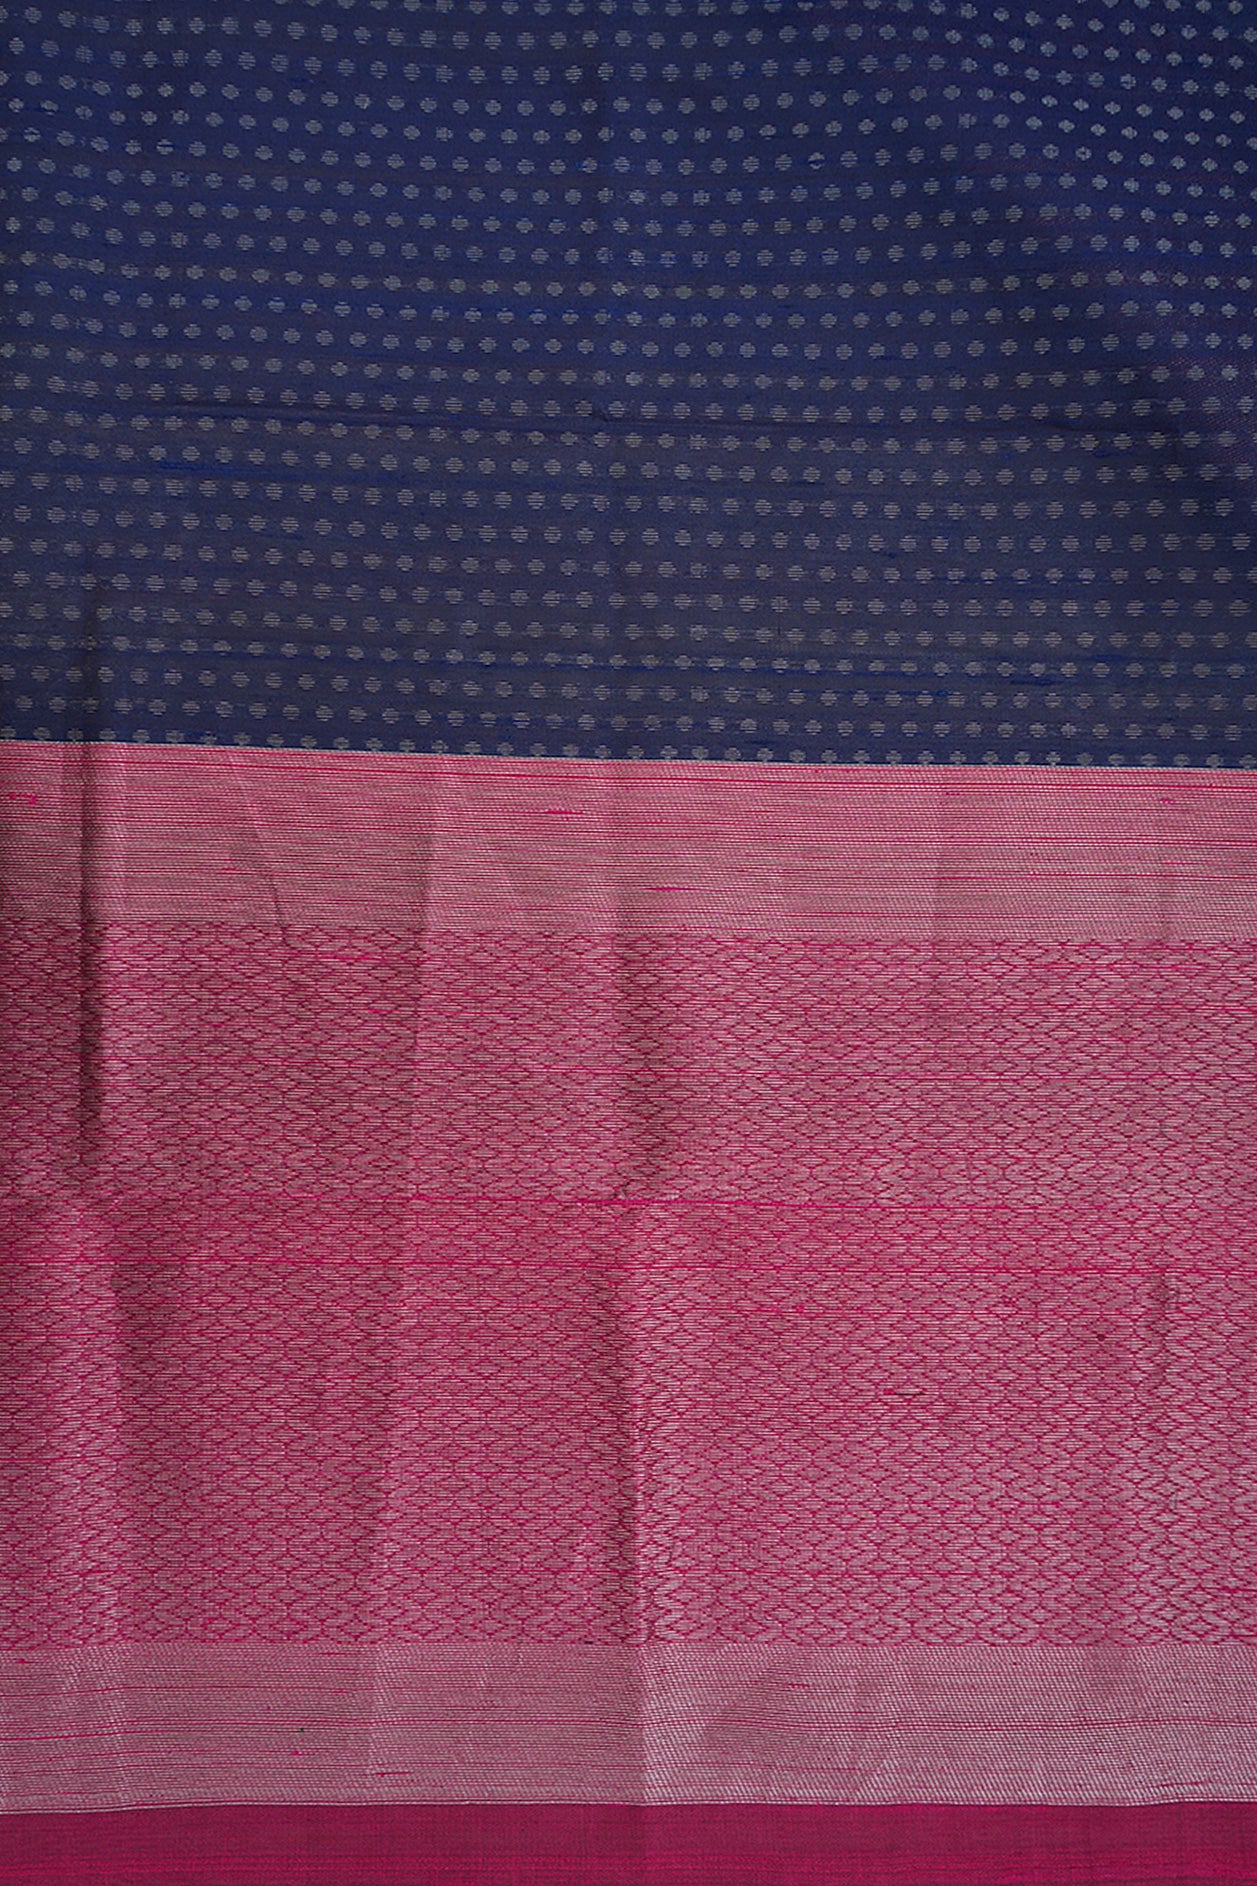 Silver Zari Polka Dots Navy Blue And Pink Raw Silk Dupatta